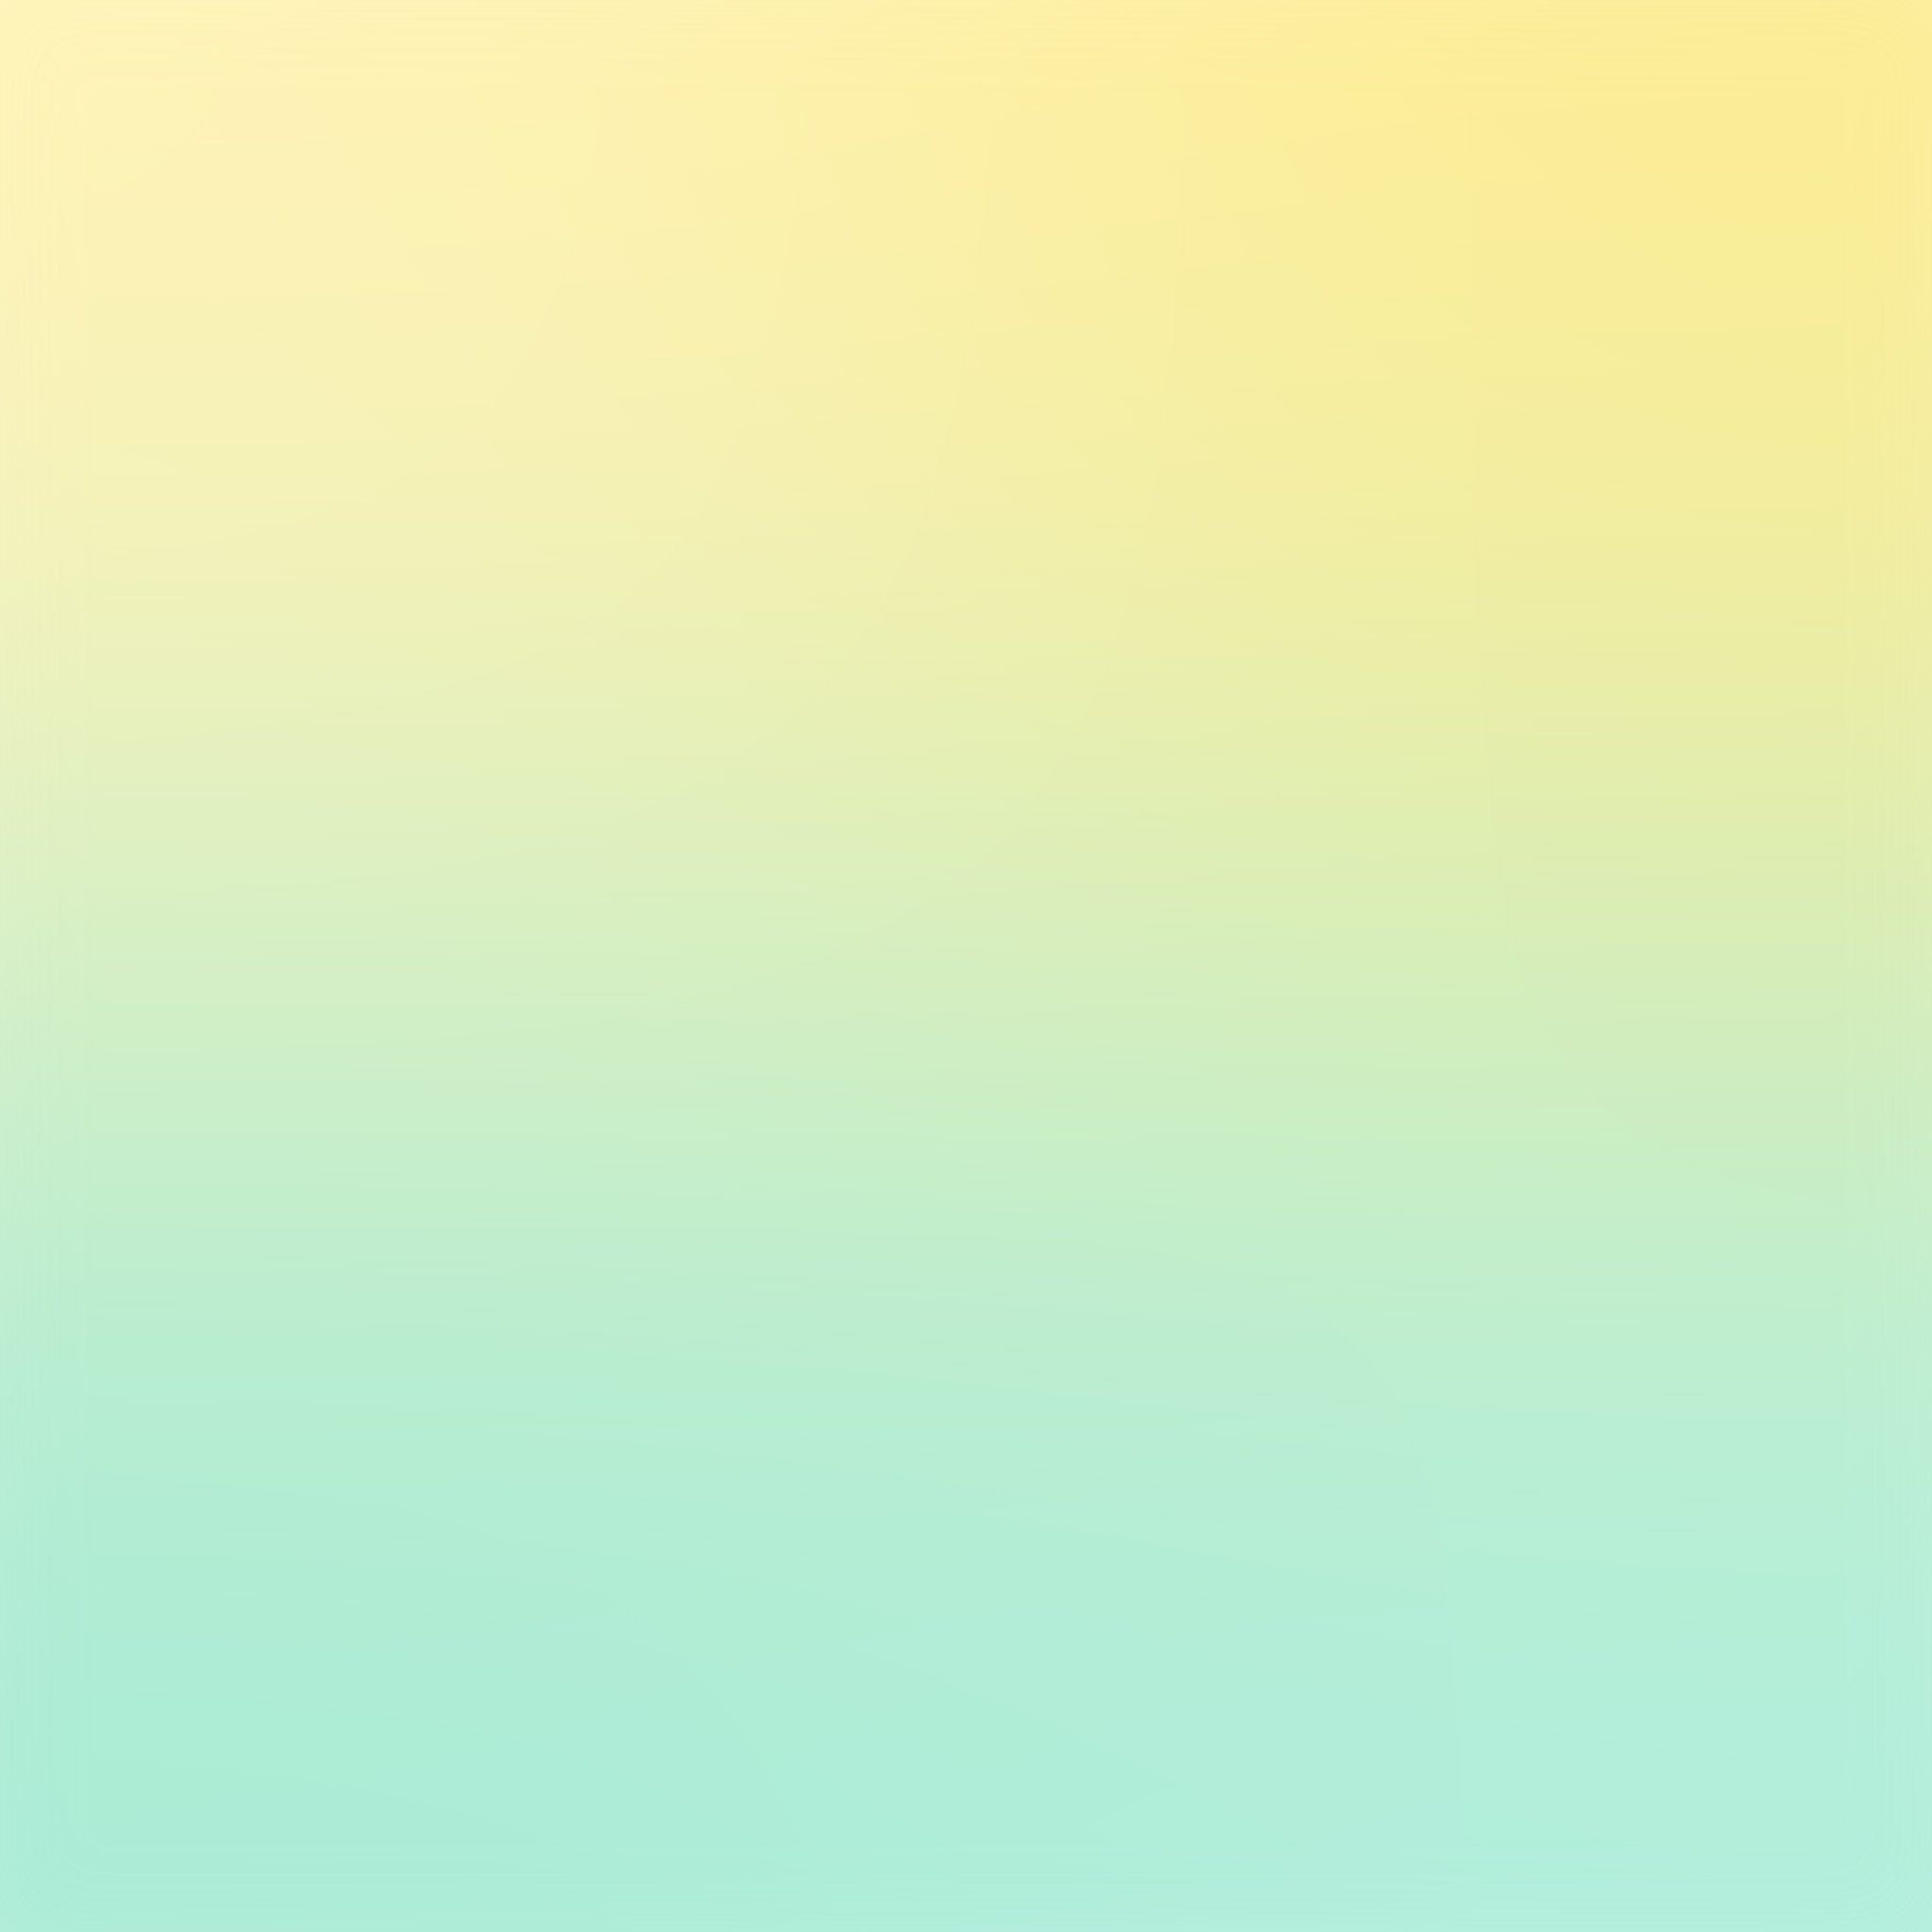 Yellow Green Pastel Blur Gradation iPad Air Wallpaper Free Download